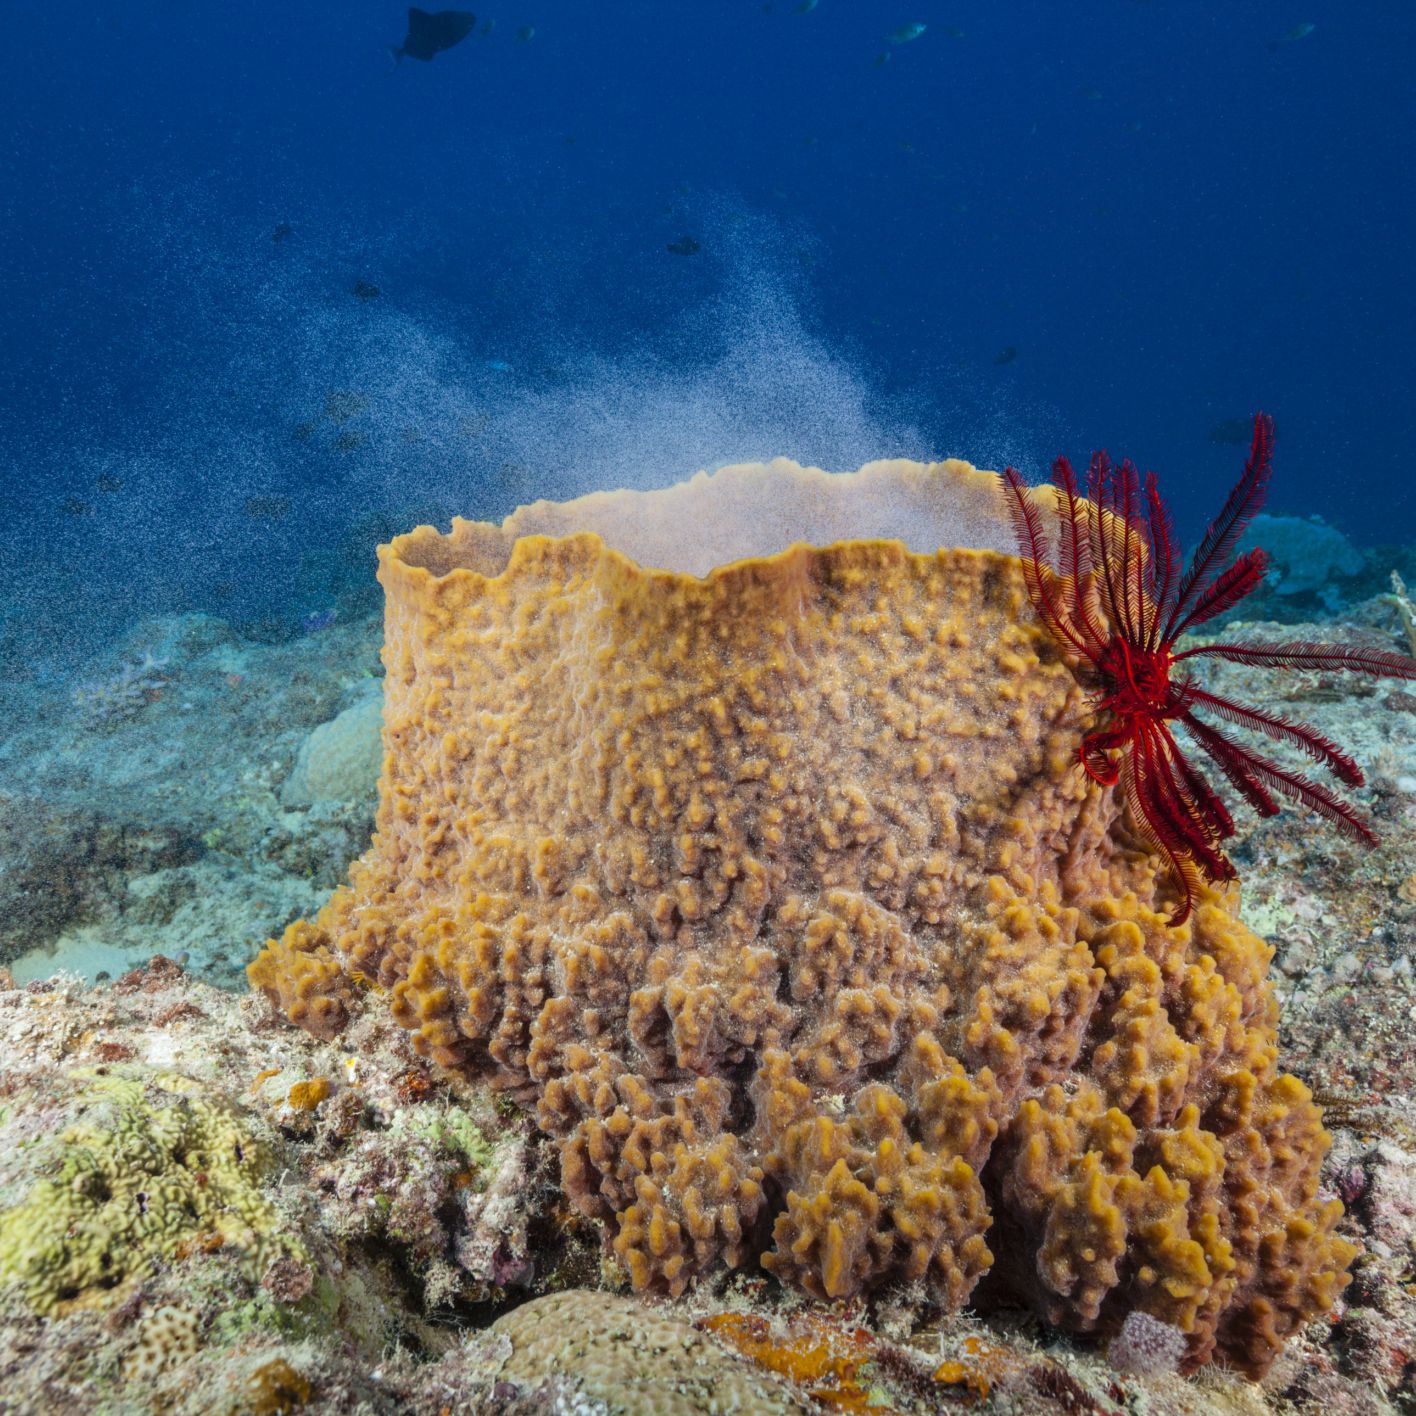 Where do sea sponges live in the ocean?